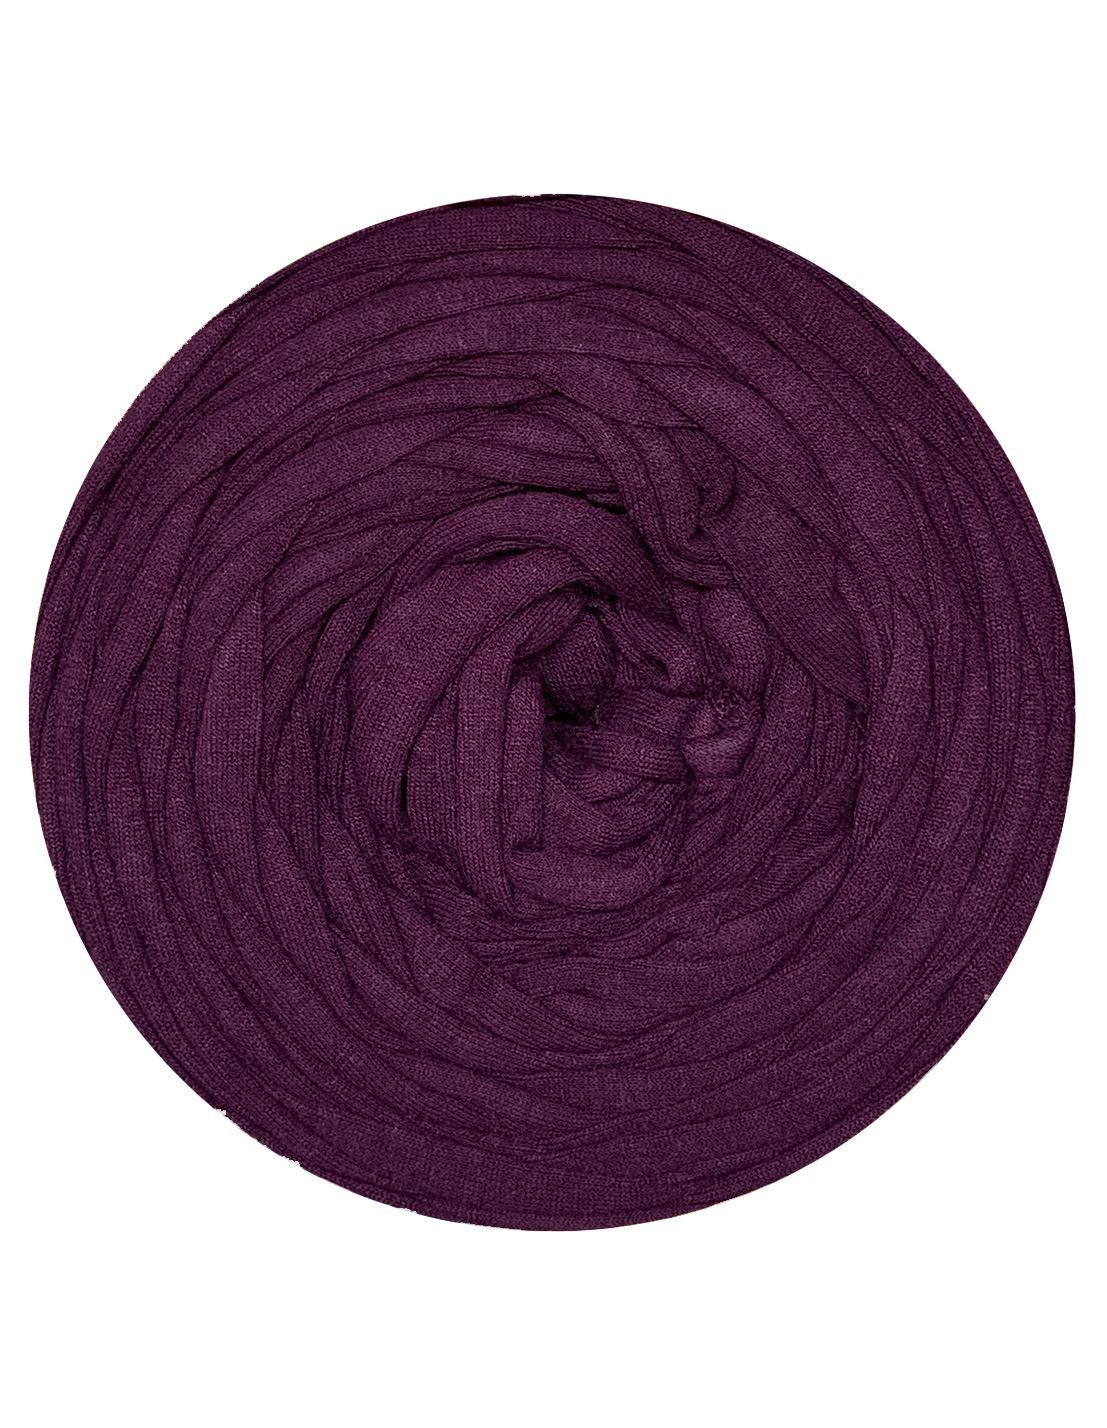 Aubergine purple t-shirt yarn (100-120m)